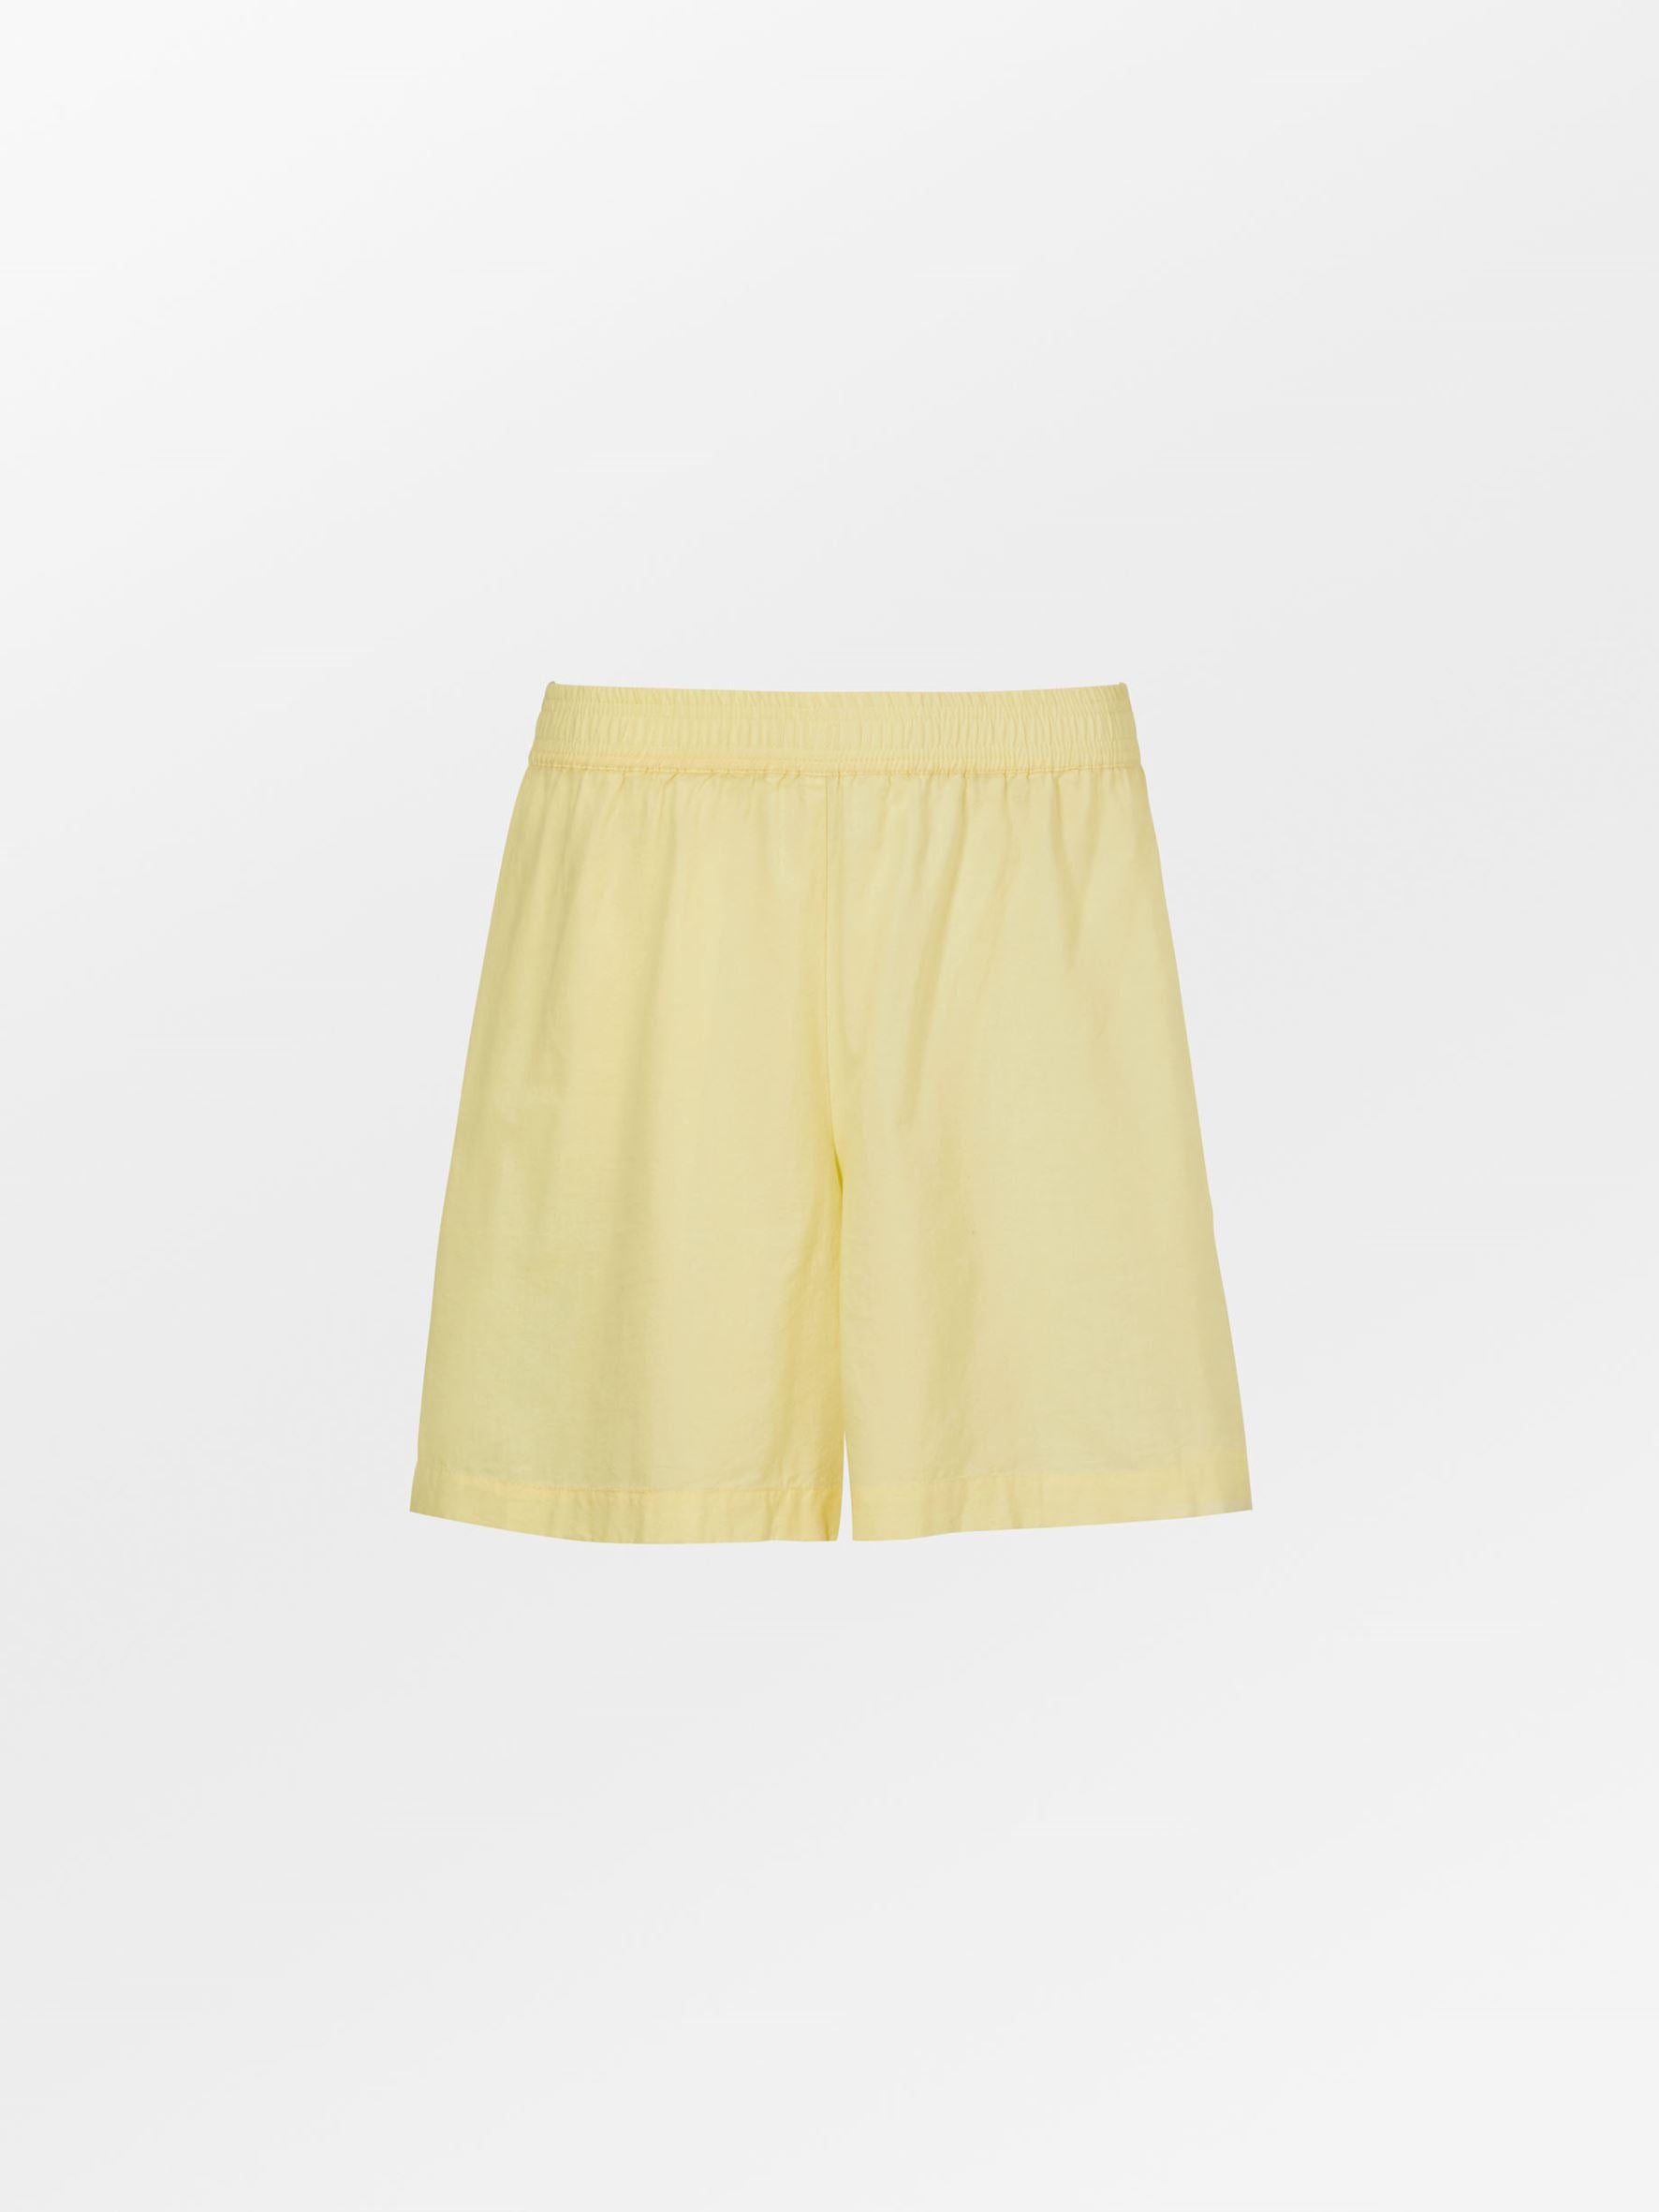 Becksöndergaard, Solid Shorts - Popcorn Yellow, archive, sale, sale, archive